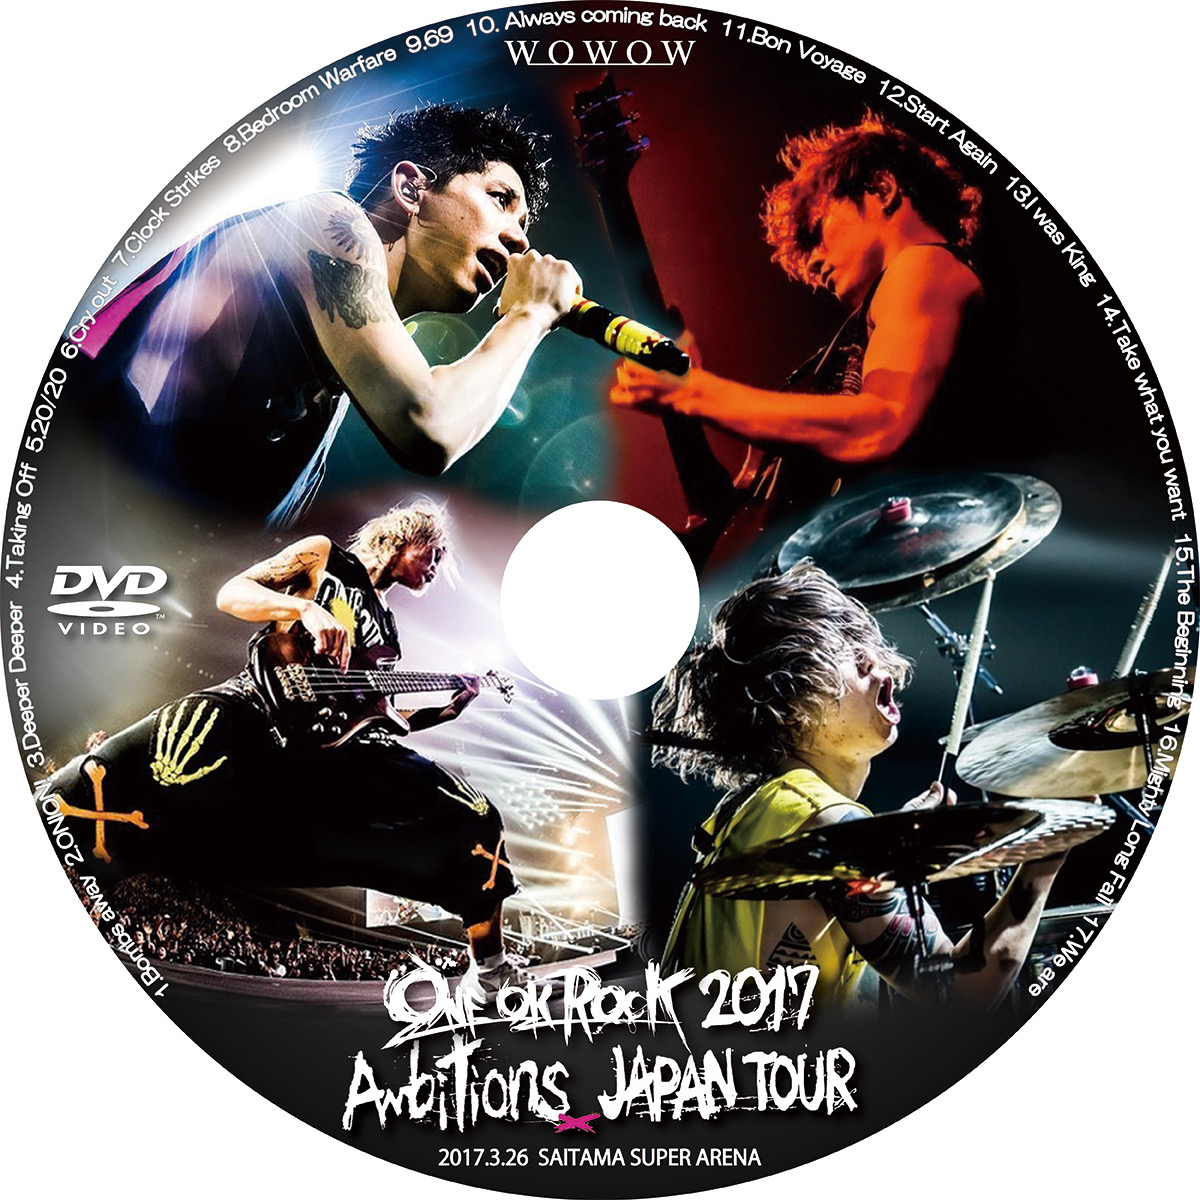 ONE OK ROCK 2017 “Ambitions” JAPAN TOUR WOWOWライブ : こんなレーベル作ってみた